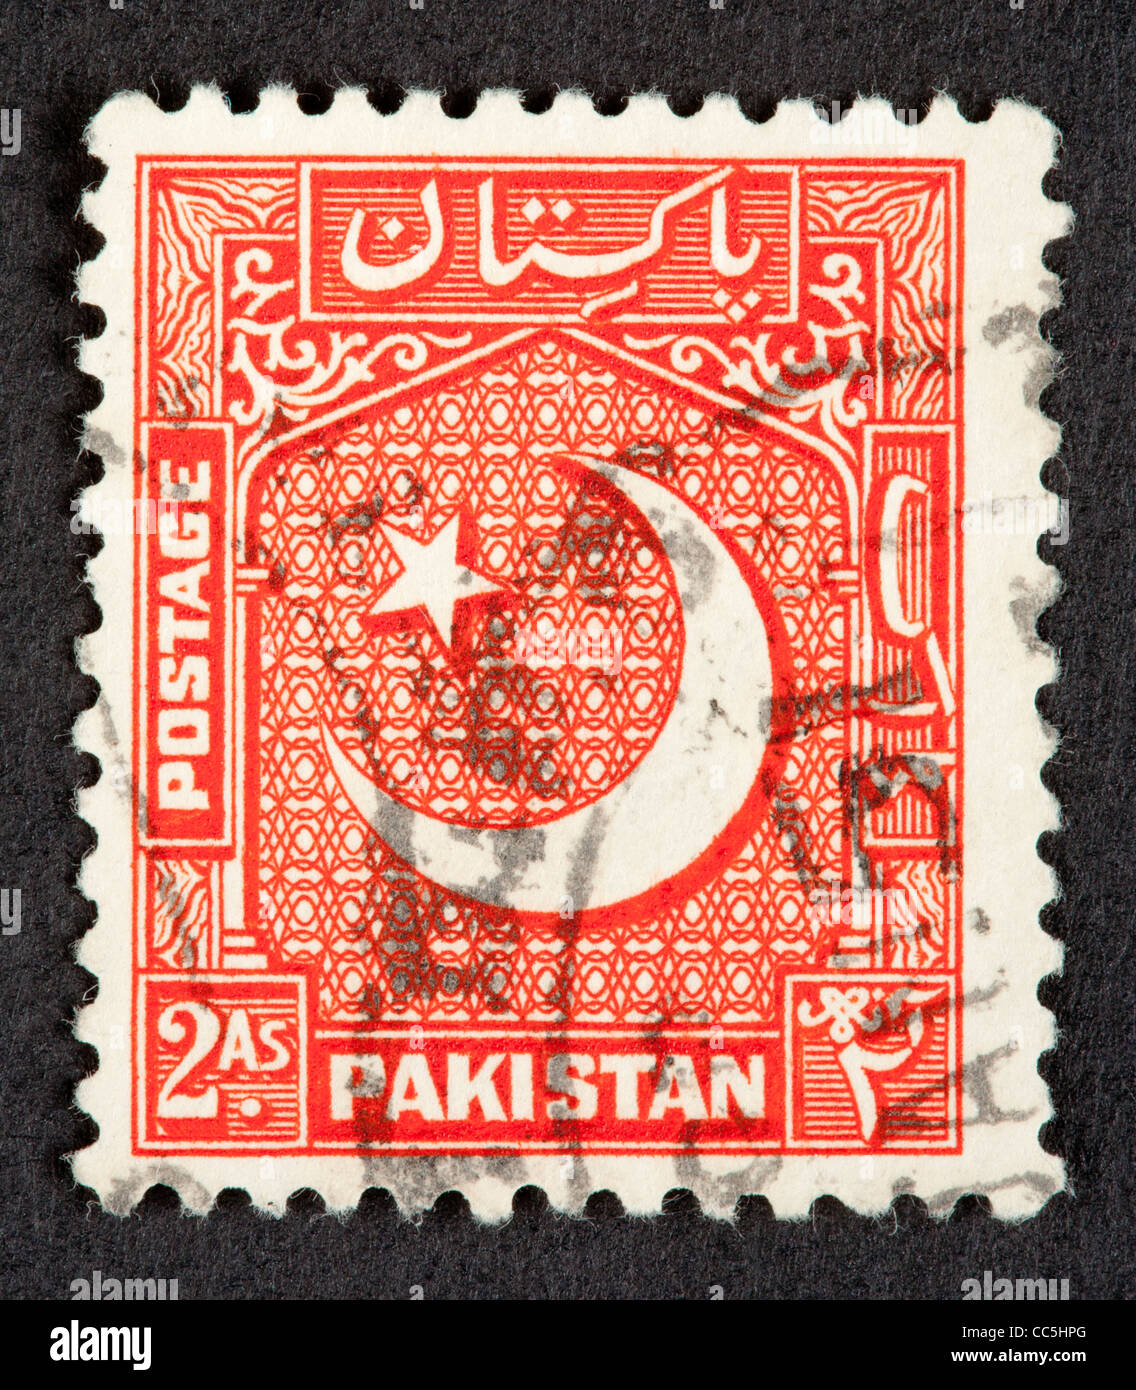 Pakistani postage stamp Stock Photo